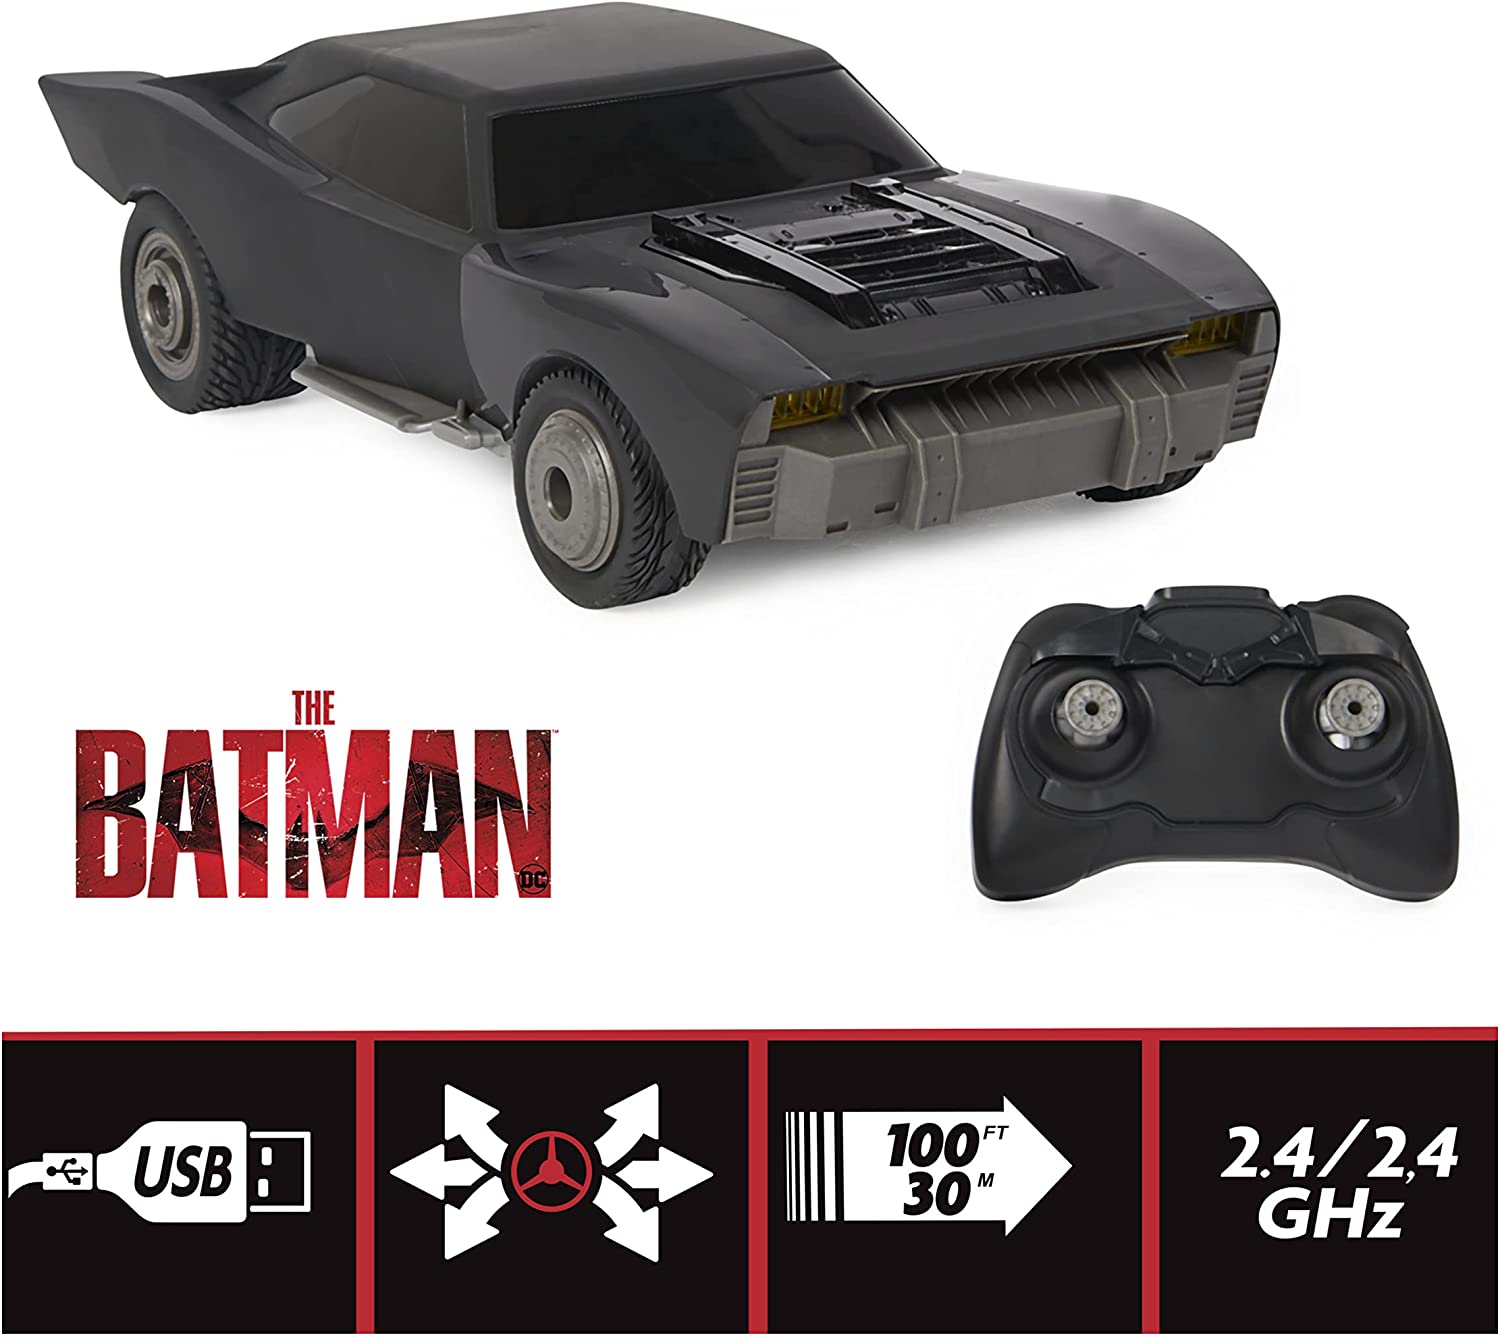 The Batman Turbo Boost Batmobile